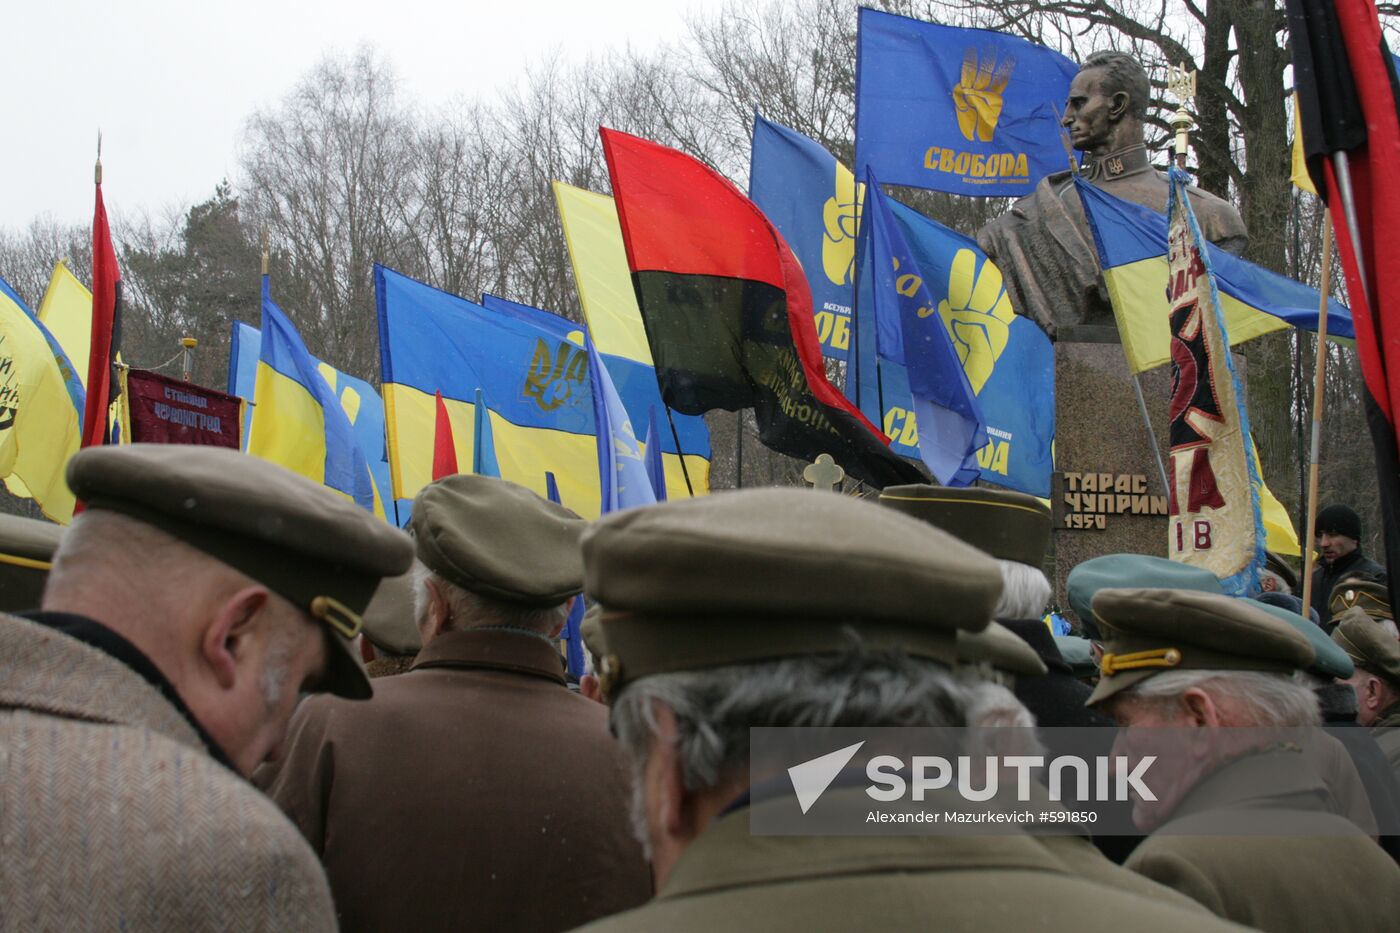 Ukraine observes Roman Shukhevich death anniversary